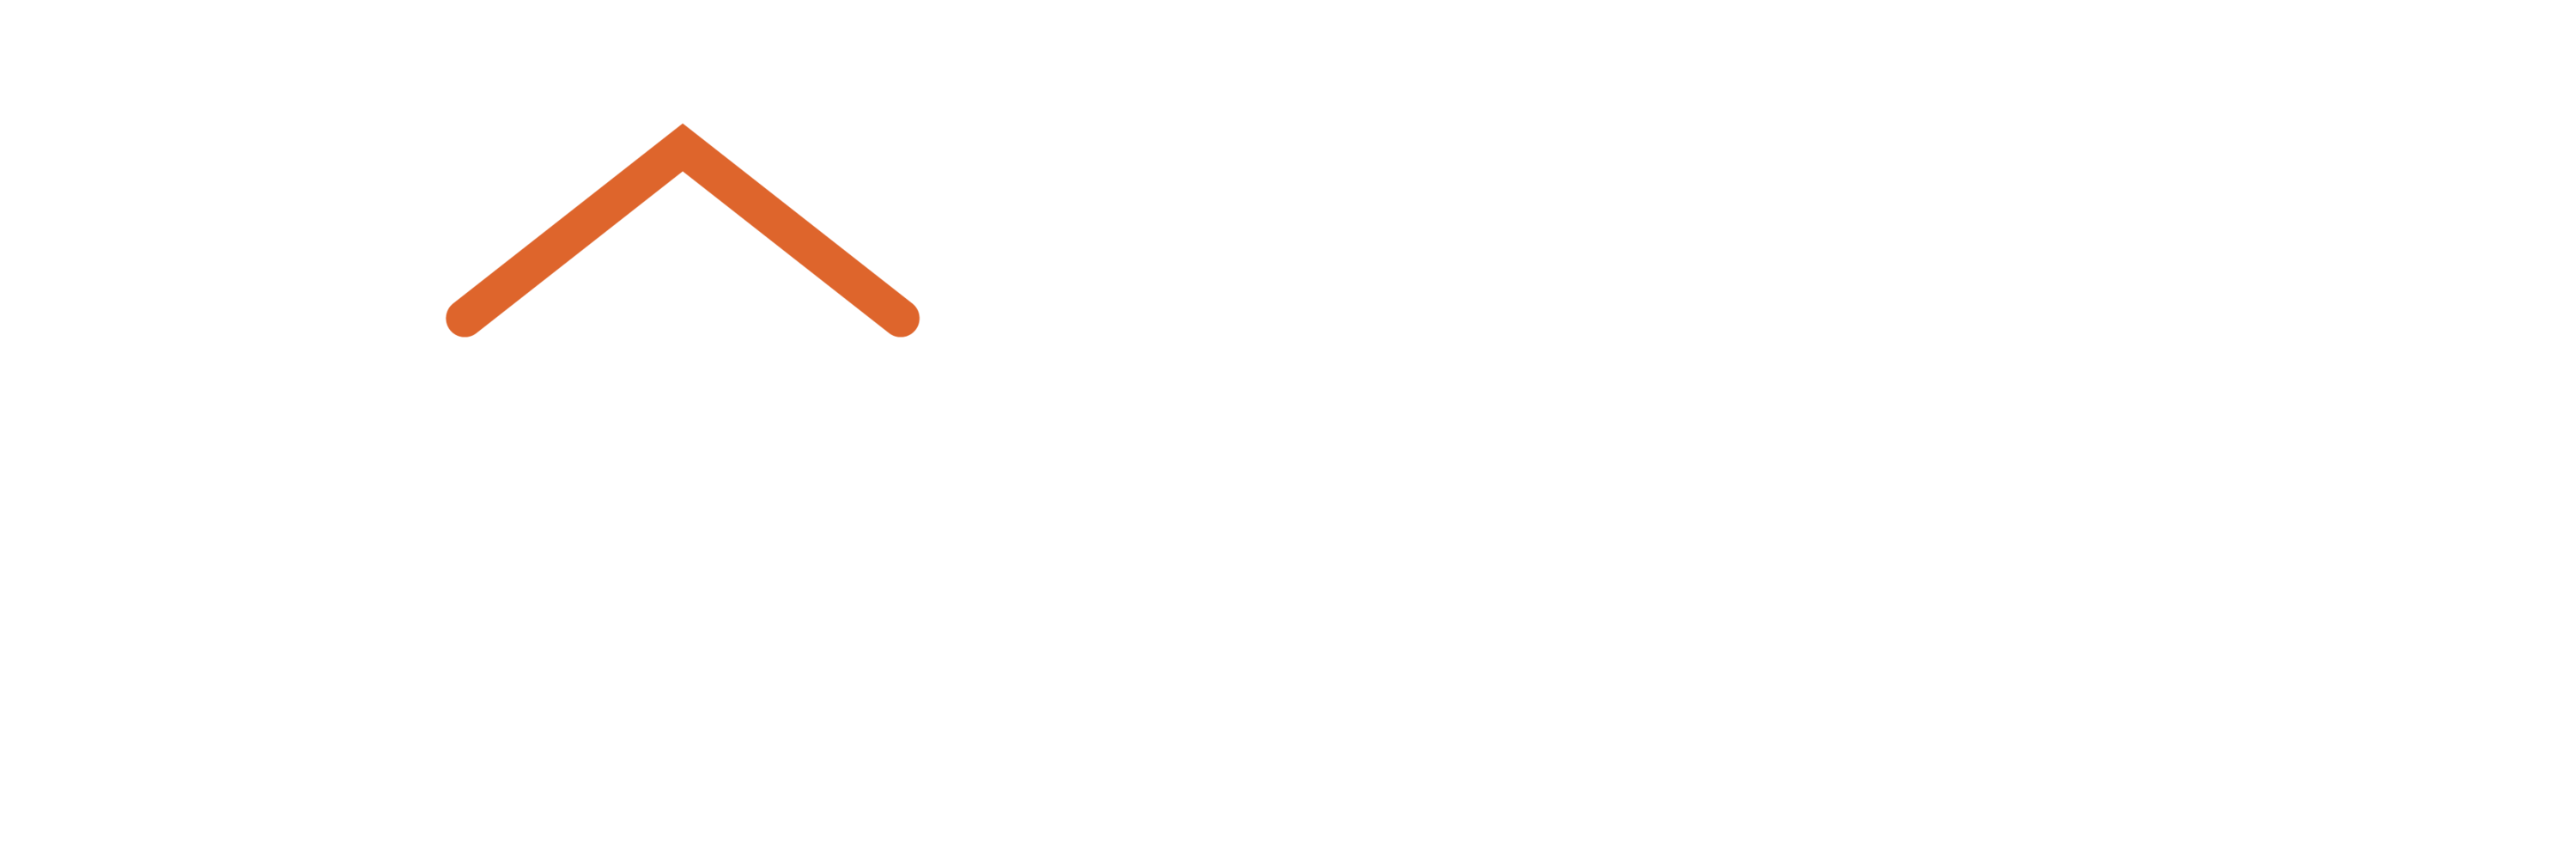 ultra magazine logo white.